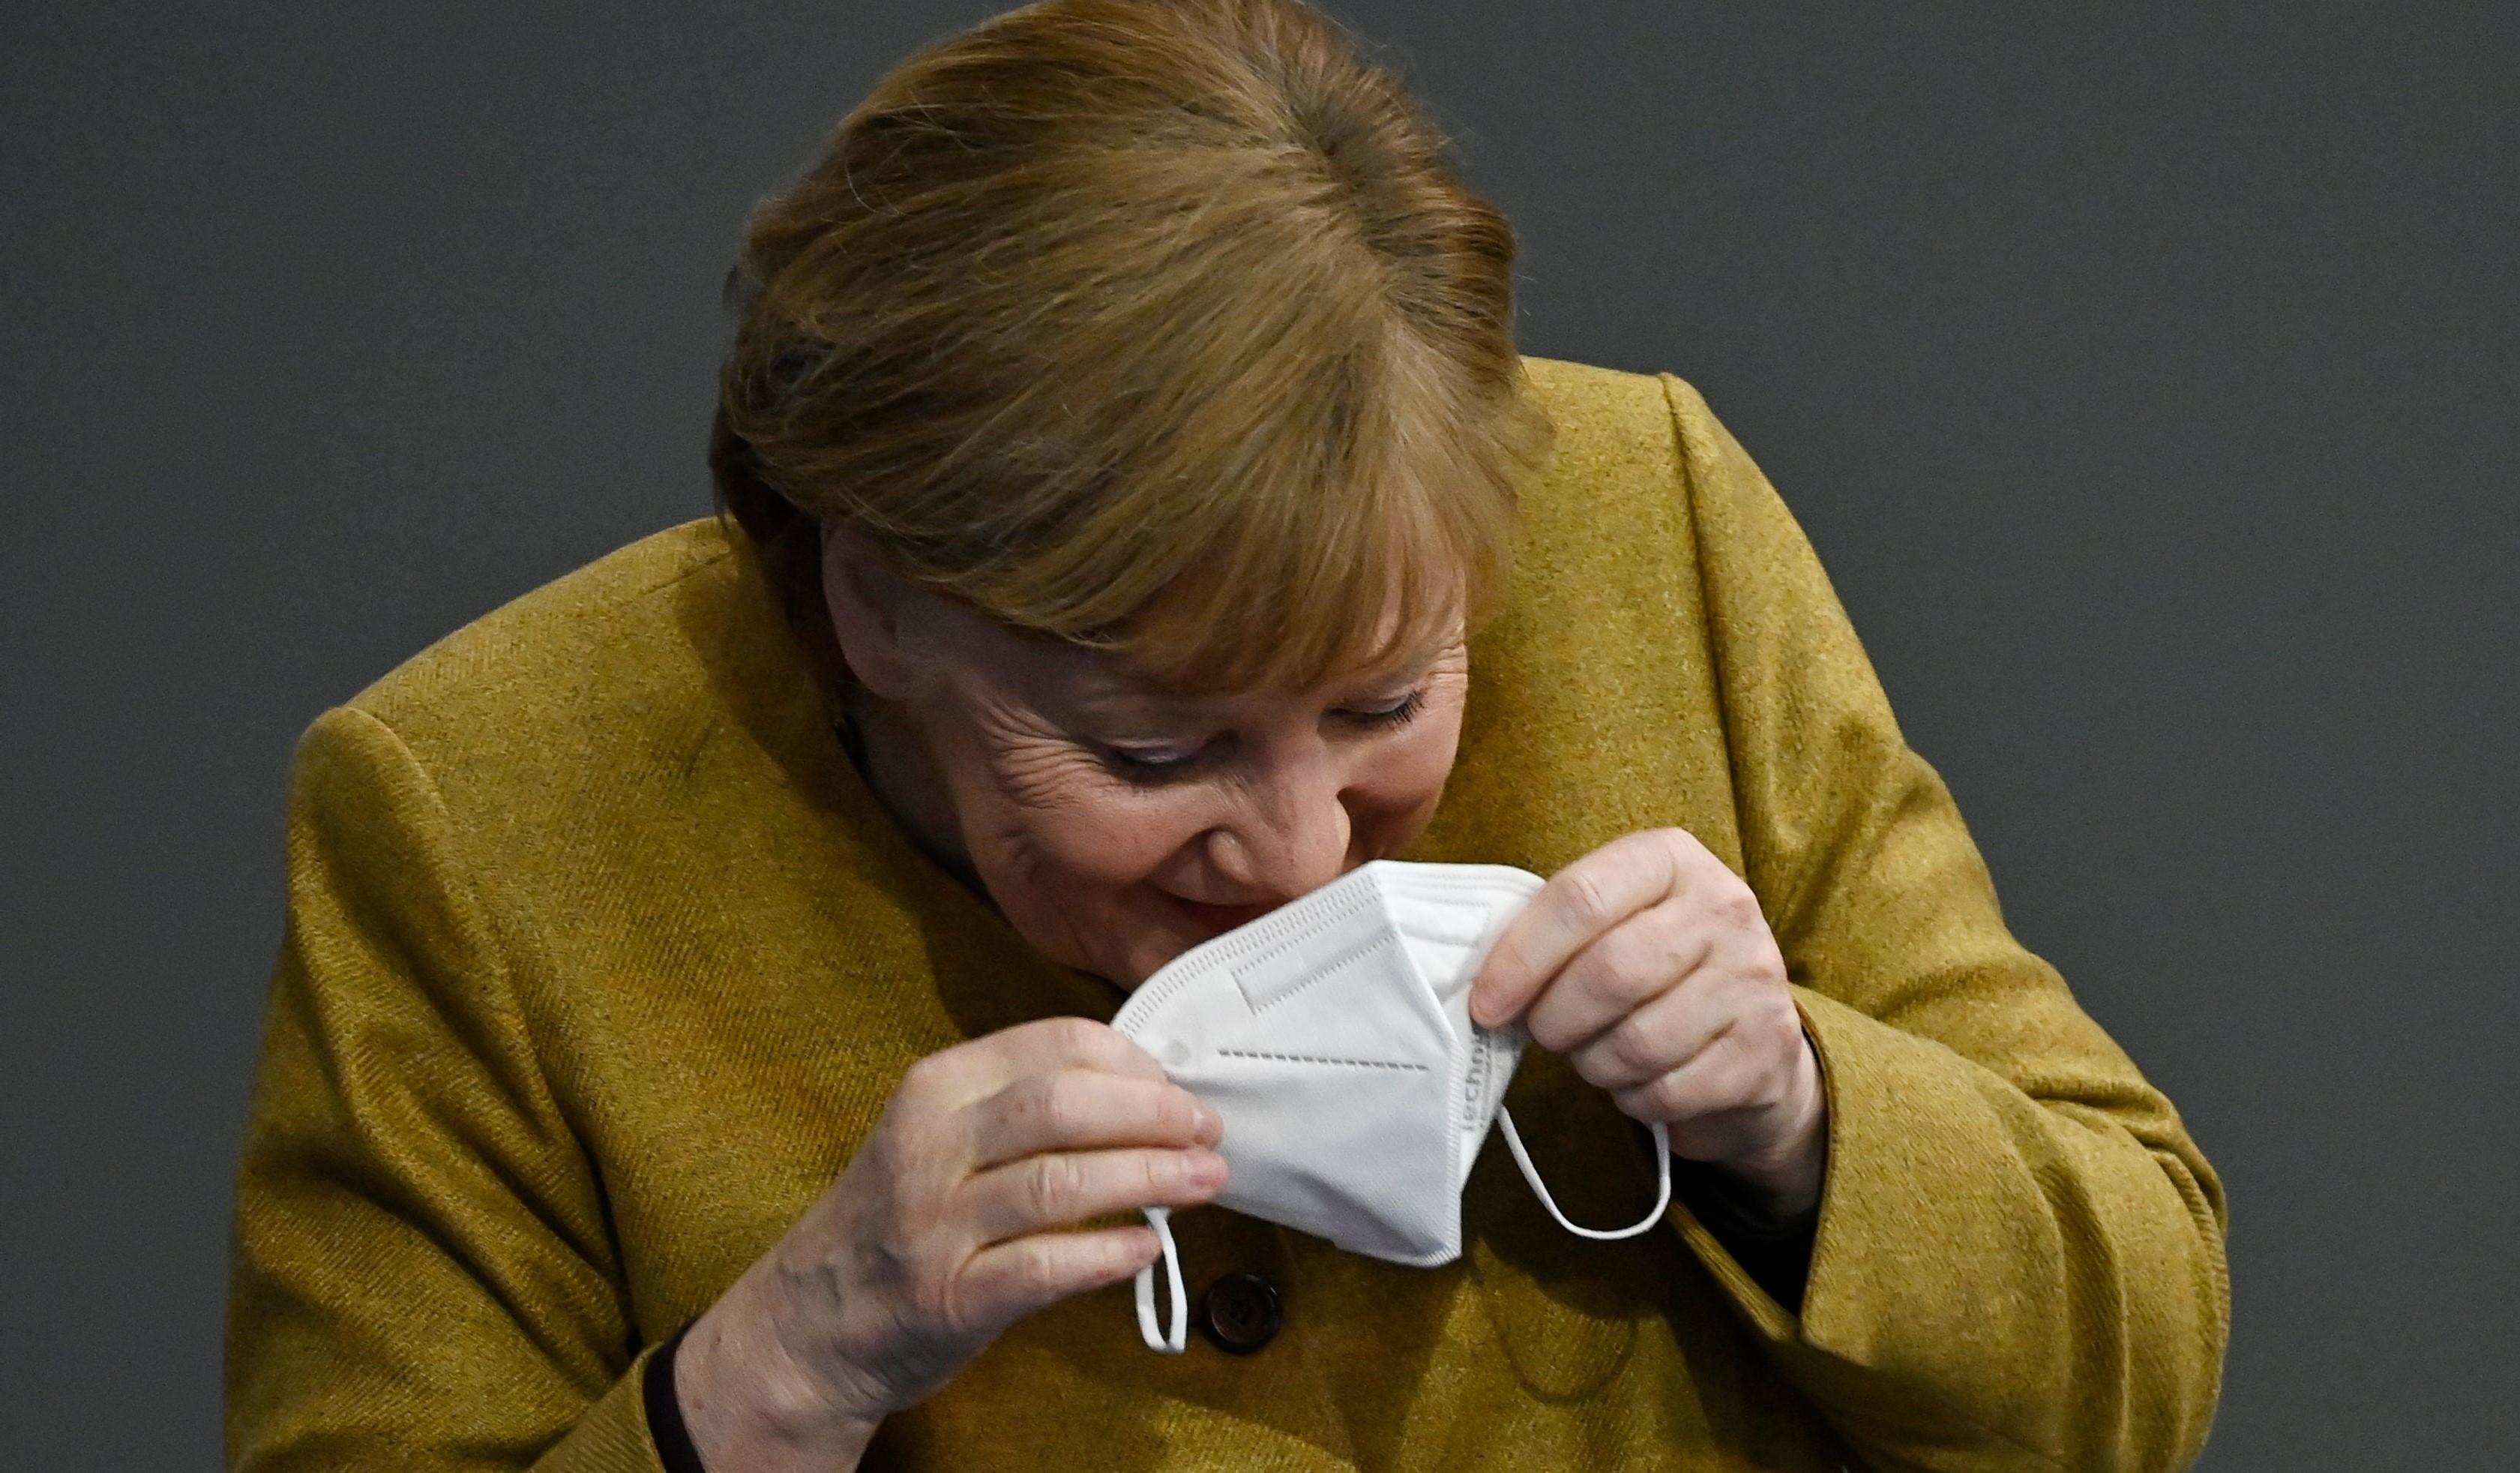 Angela Merkel - Avaz